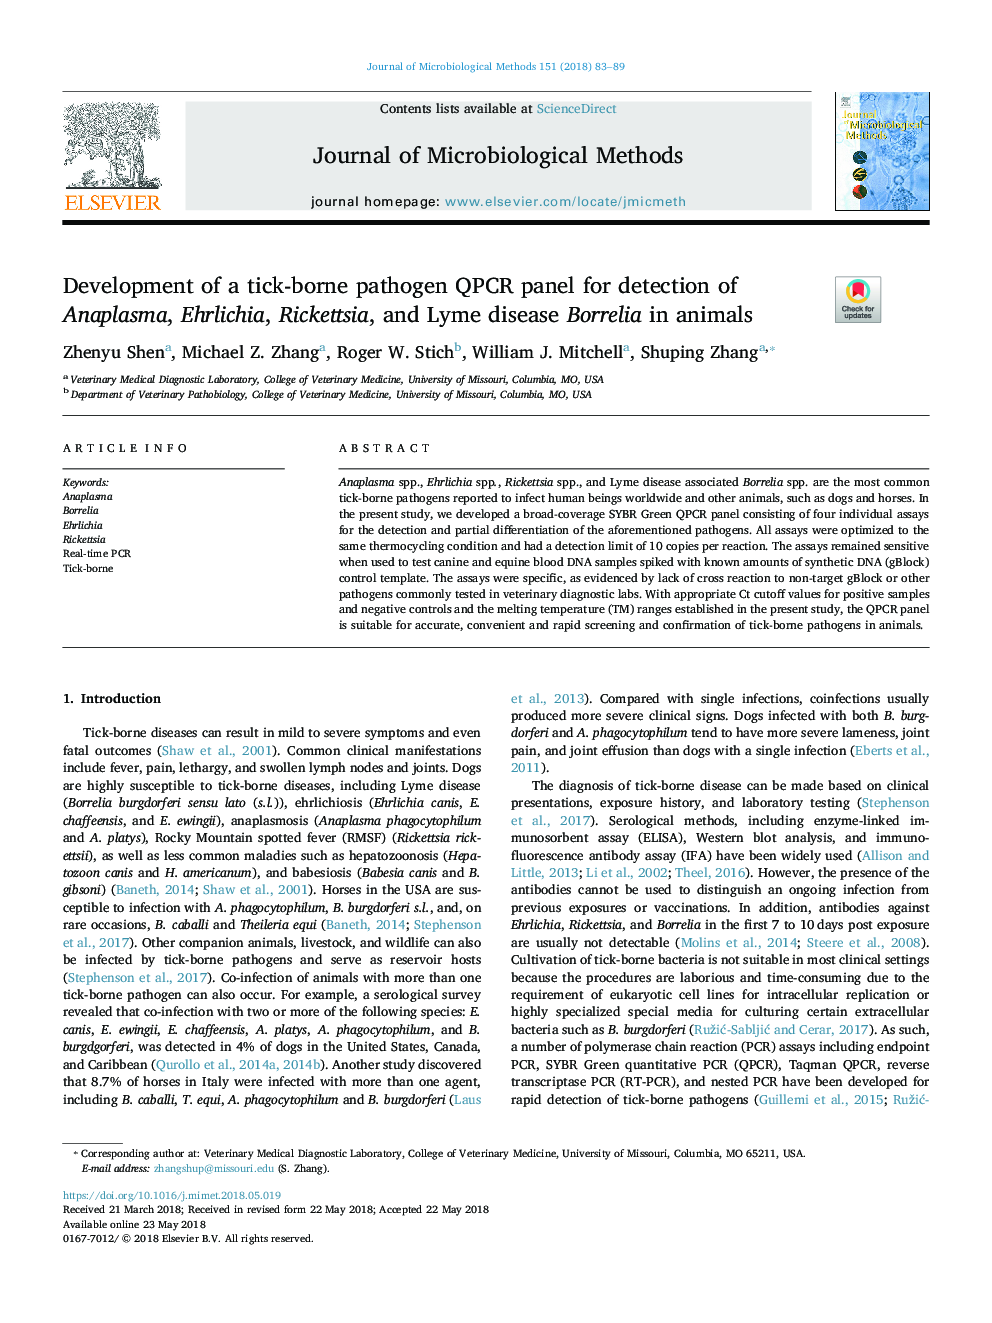 Development of a tick-borne pathogen QPCR panel for detection of Anaplasma, Ehrlichia, Rickettsia, and Lyme disease Borrelia in animals